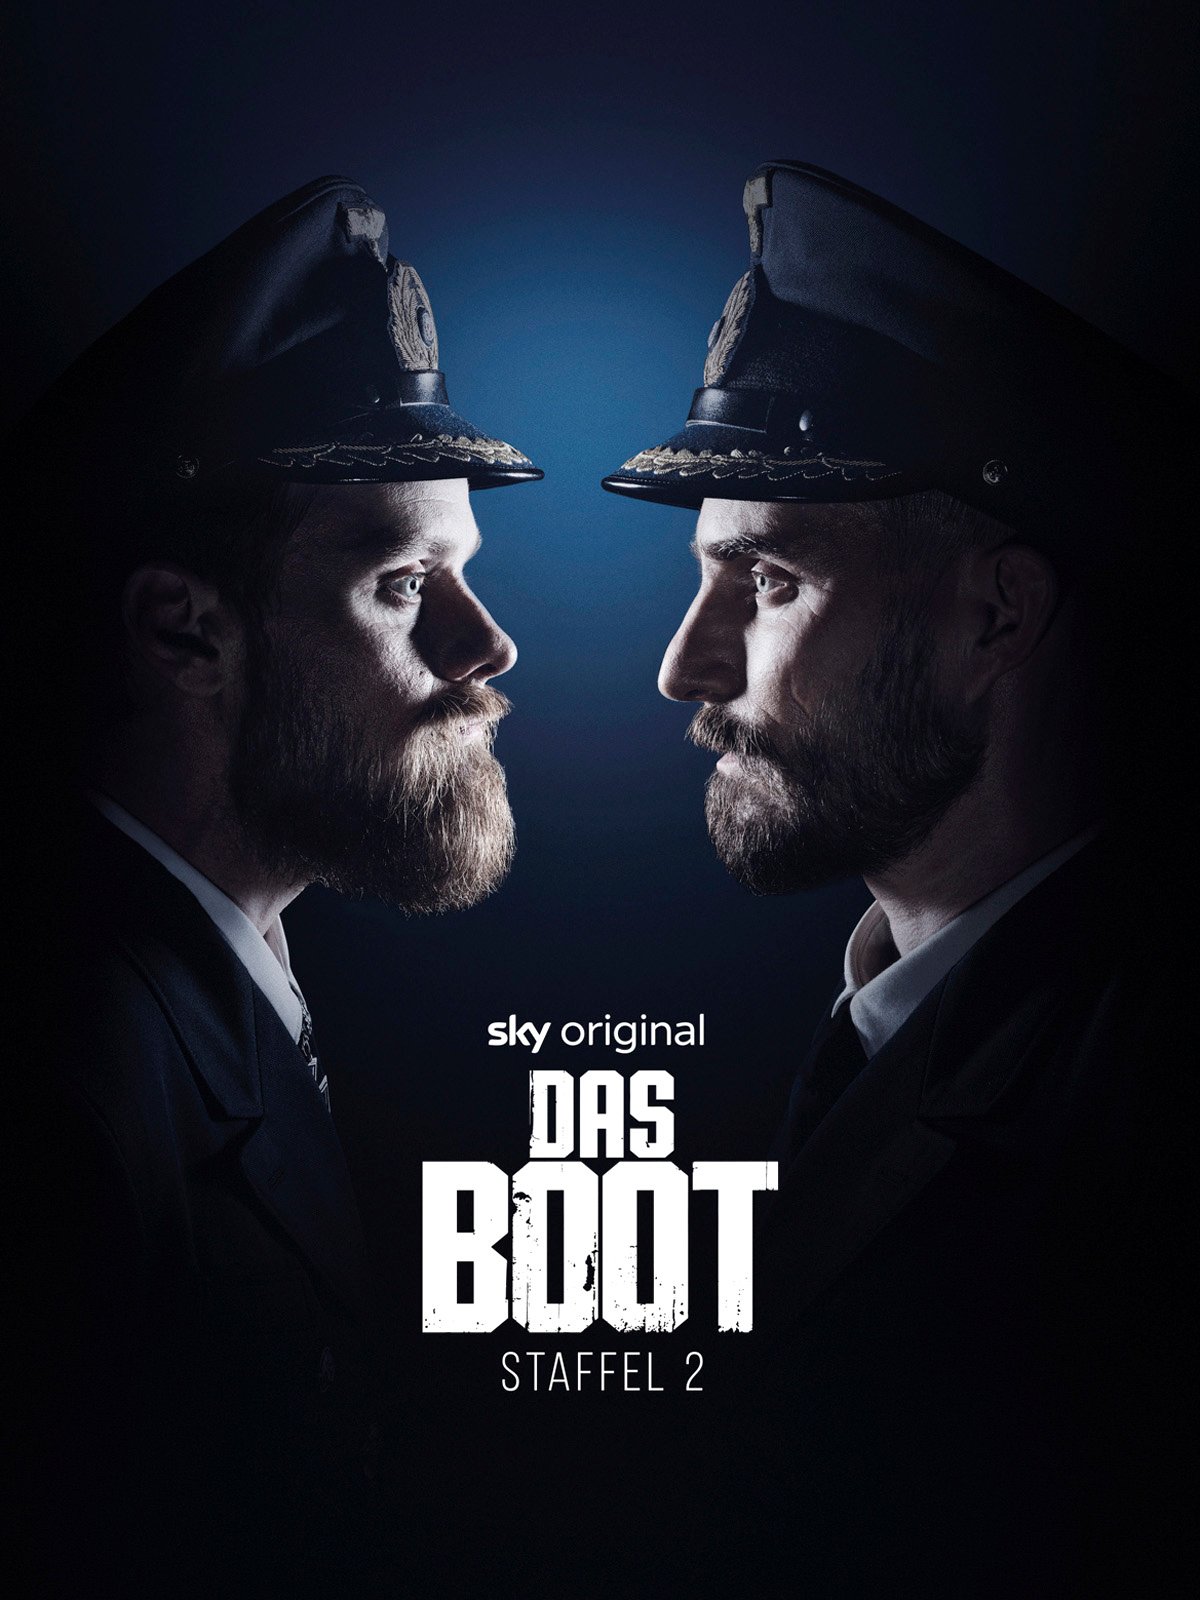 Das Boot-Staffel 4: Trailer enthüllt Startdatum & zeigt Action